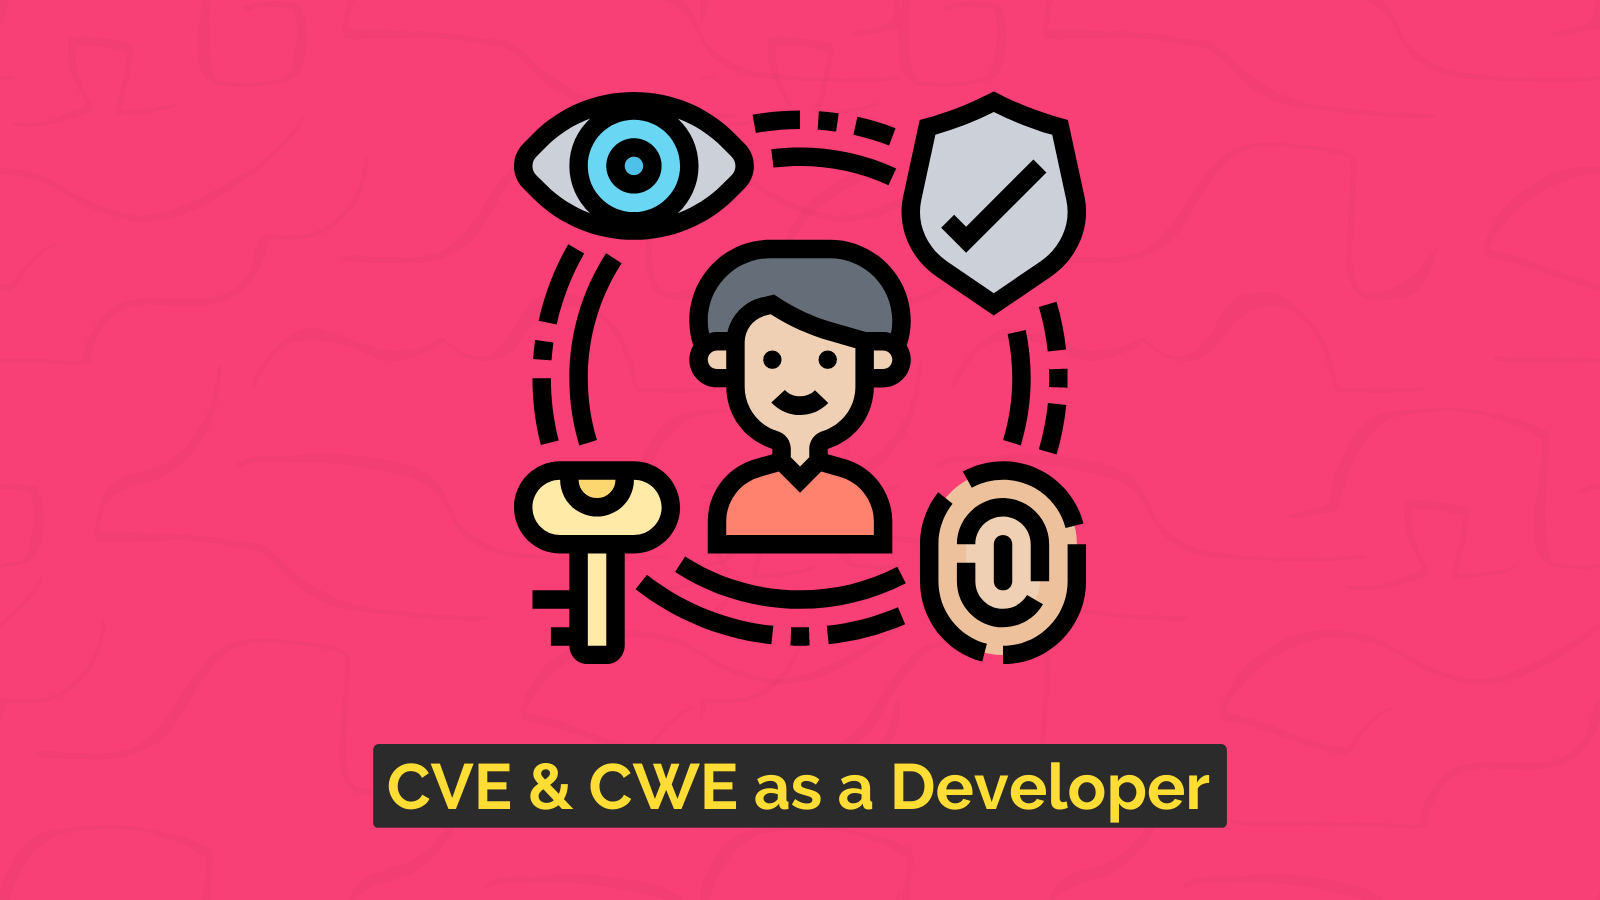 CVE and CWE as developer